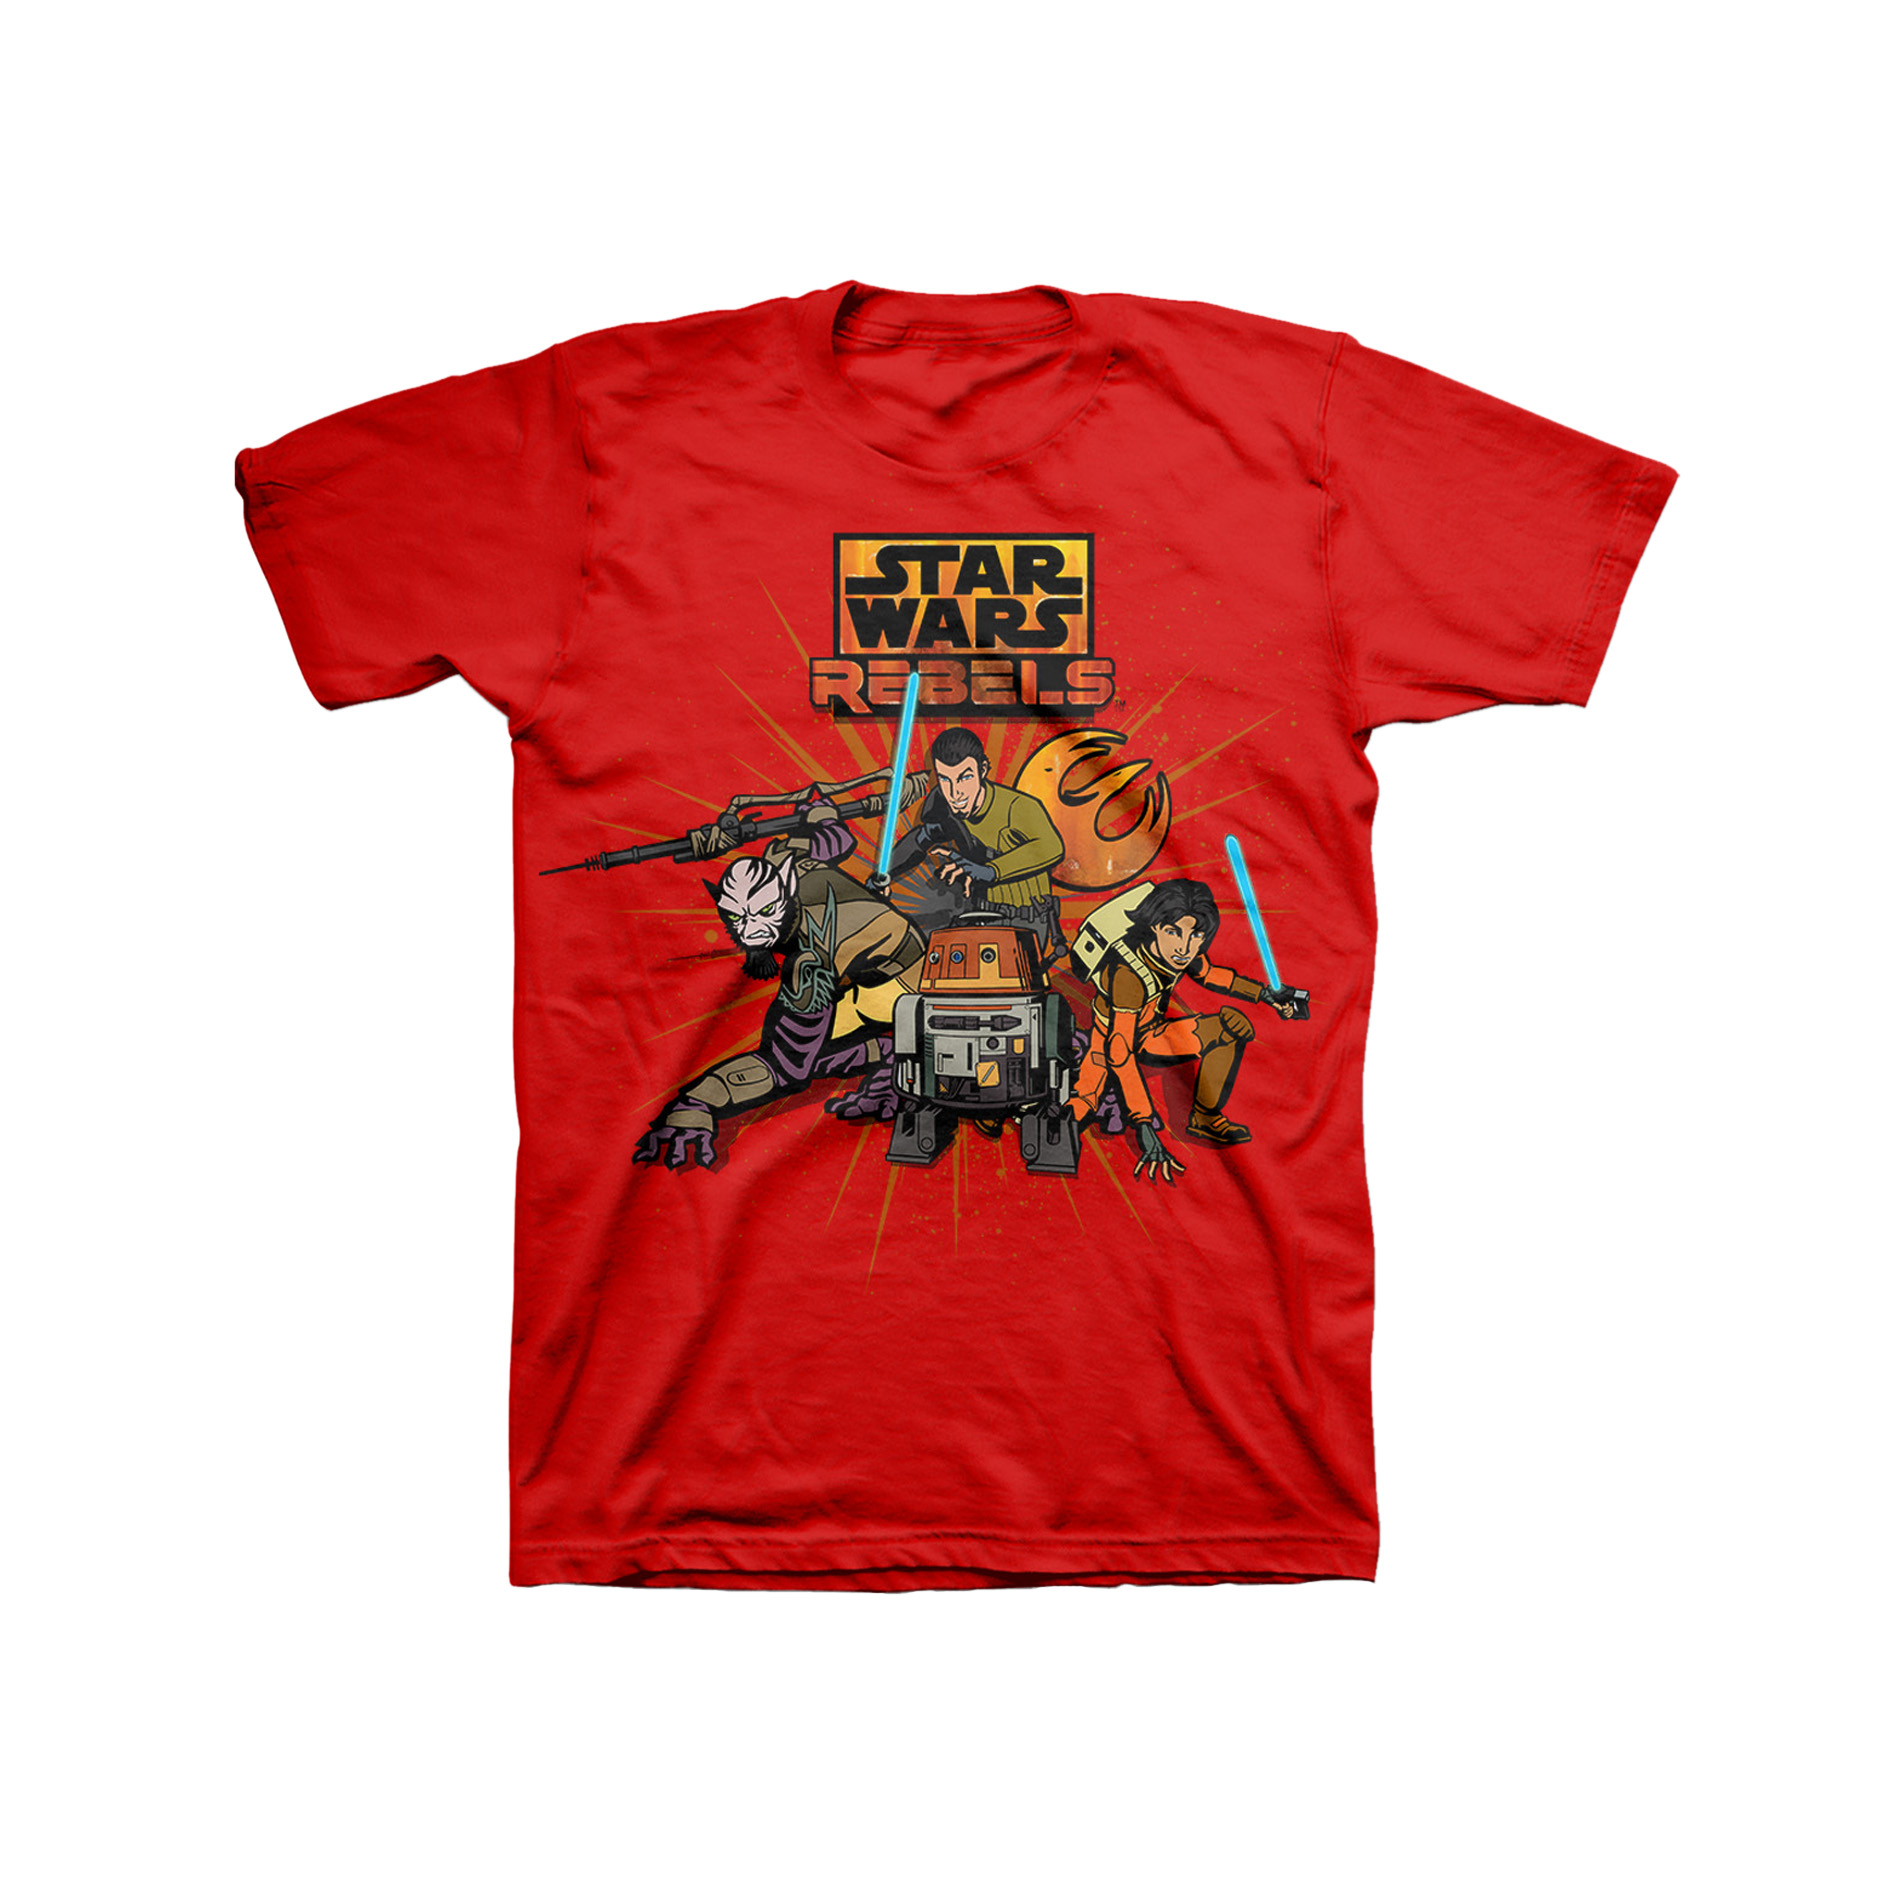 Star Wars Rebels Group Action Boy's T-shirt